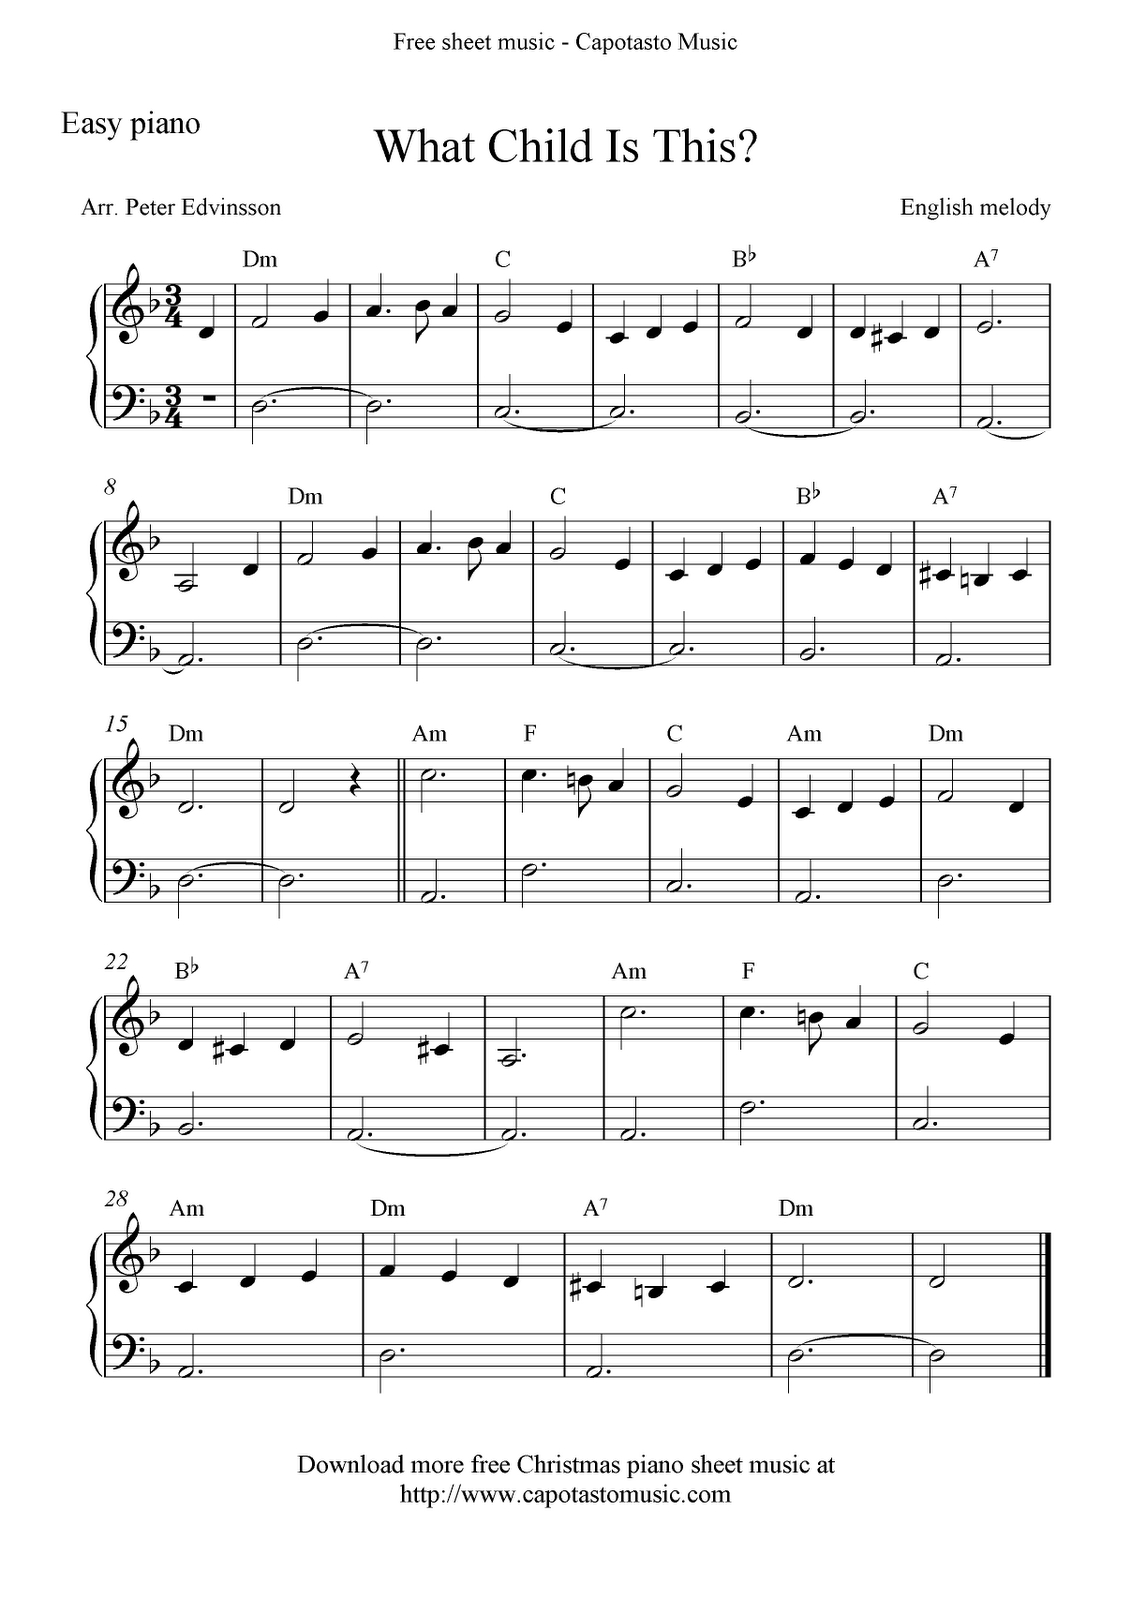 Free Sheet Music Scores: Free Christmas Piano Sheet Music, What intended for Free Christmas Piano Sheet Music For Beginners Printable